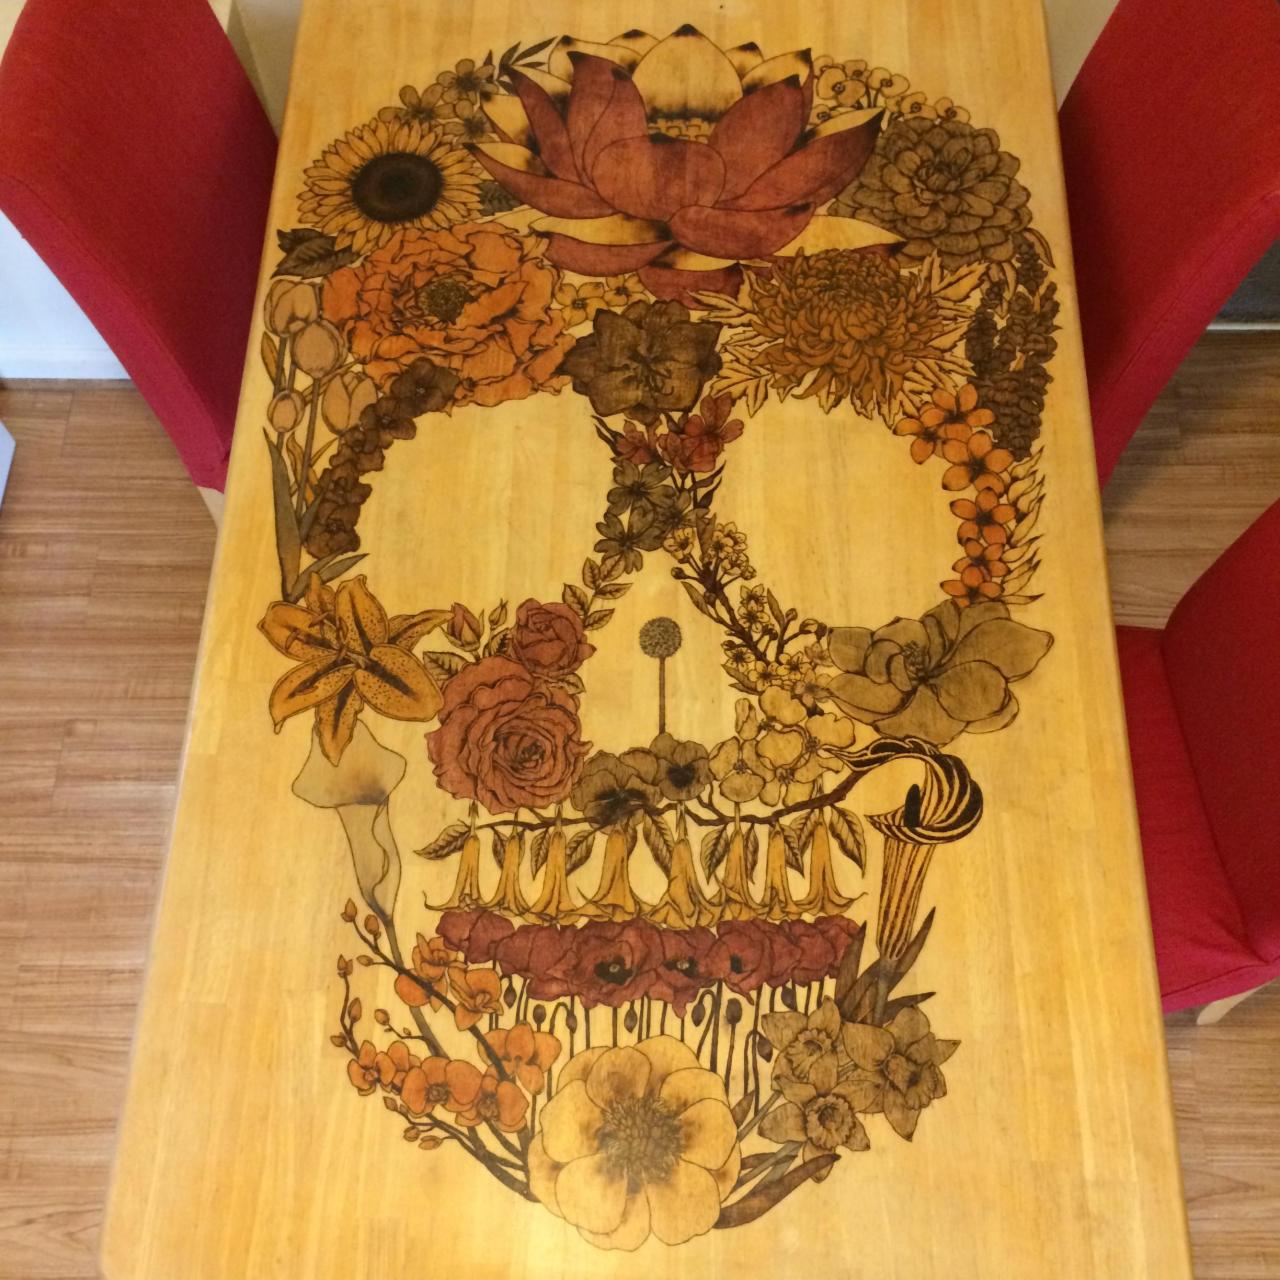 martha-bb:  Flower Skull Woodburning On Kitchen Table